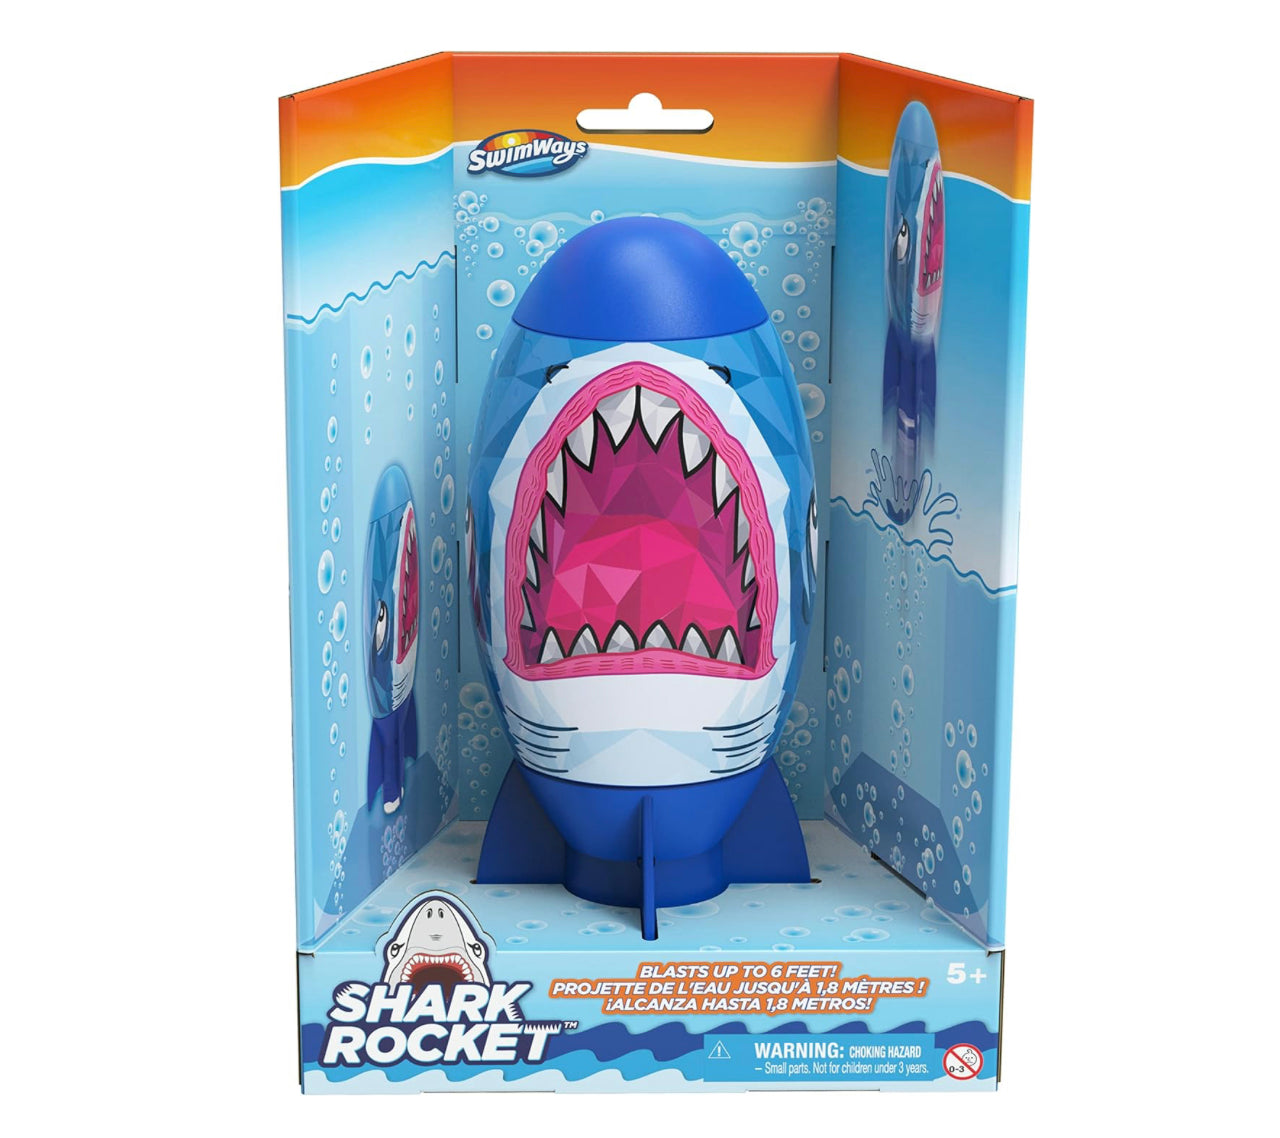 Swimways Shark Rocket